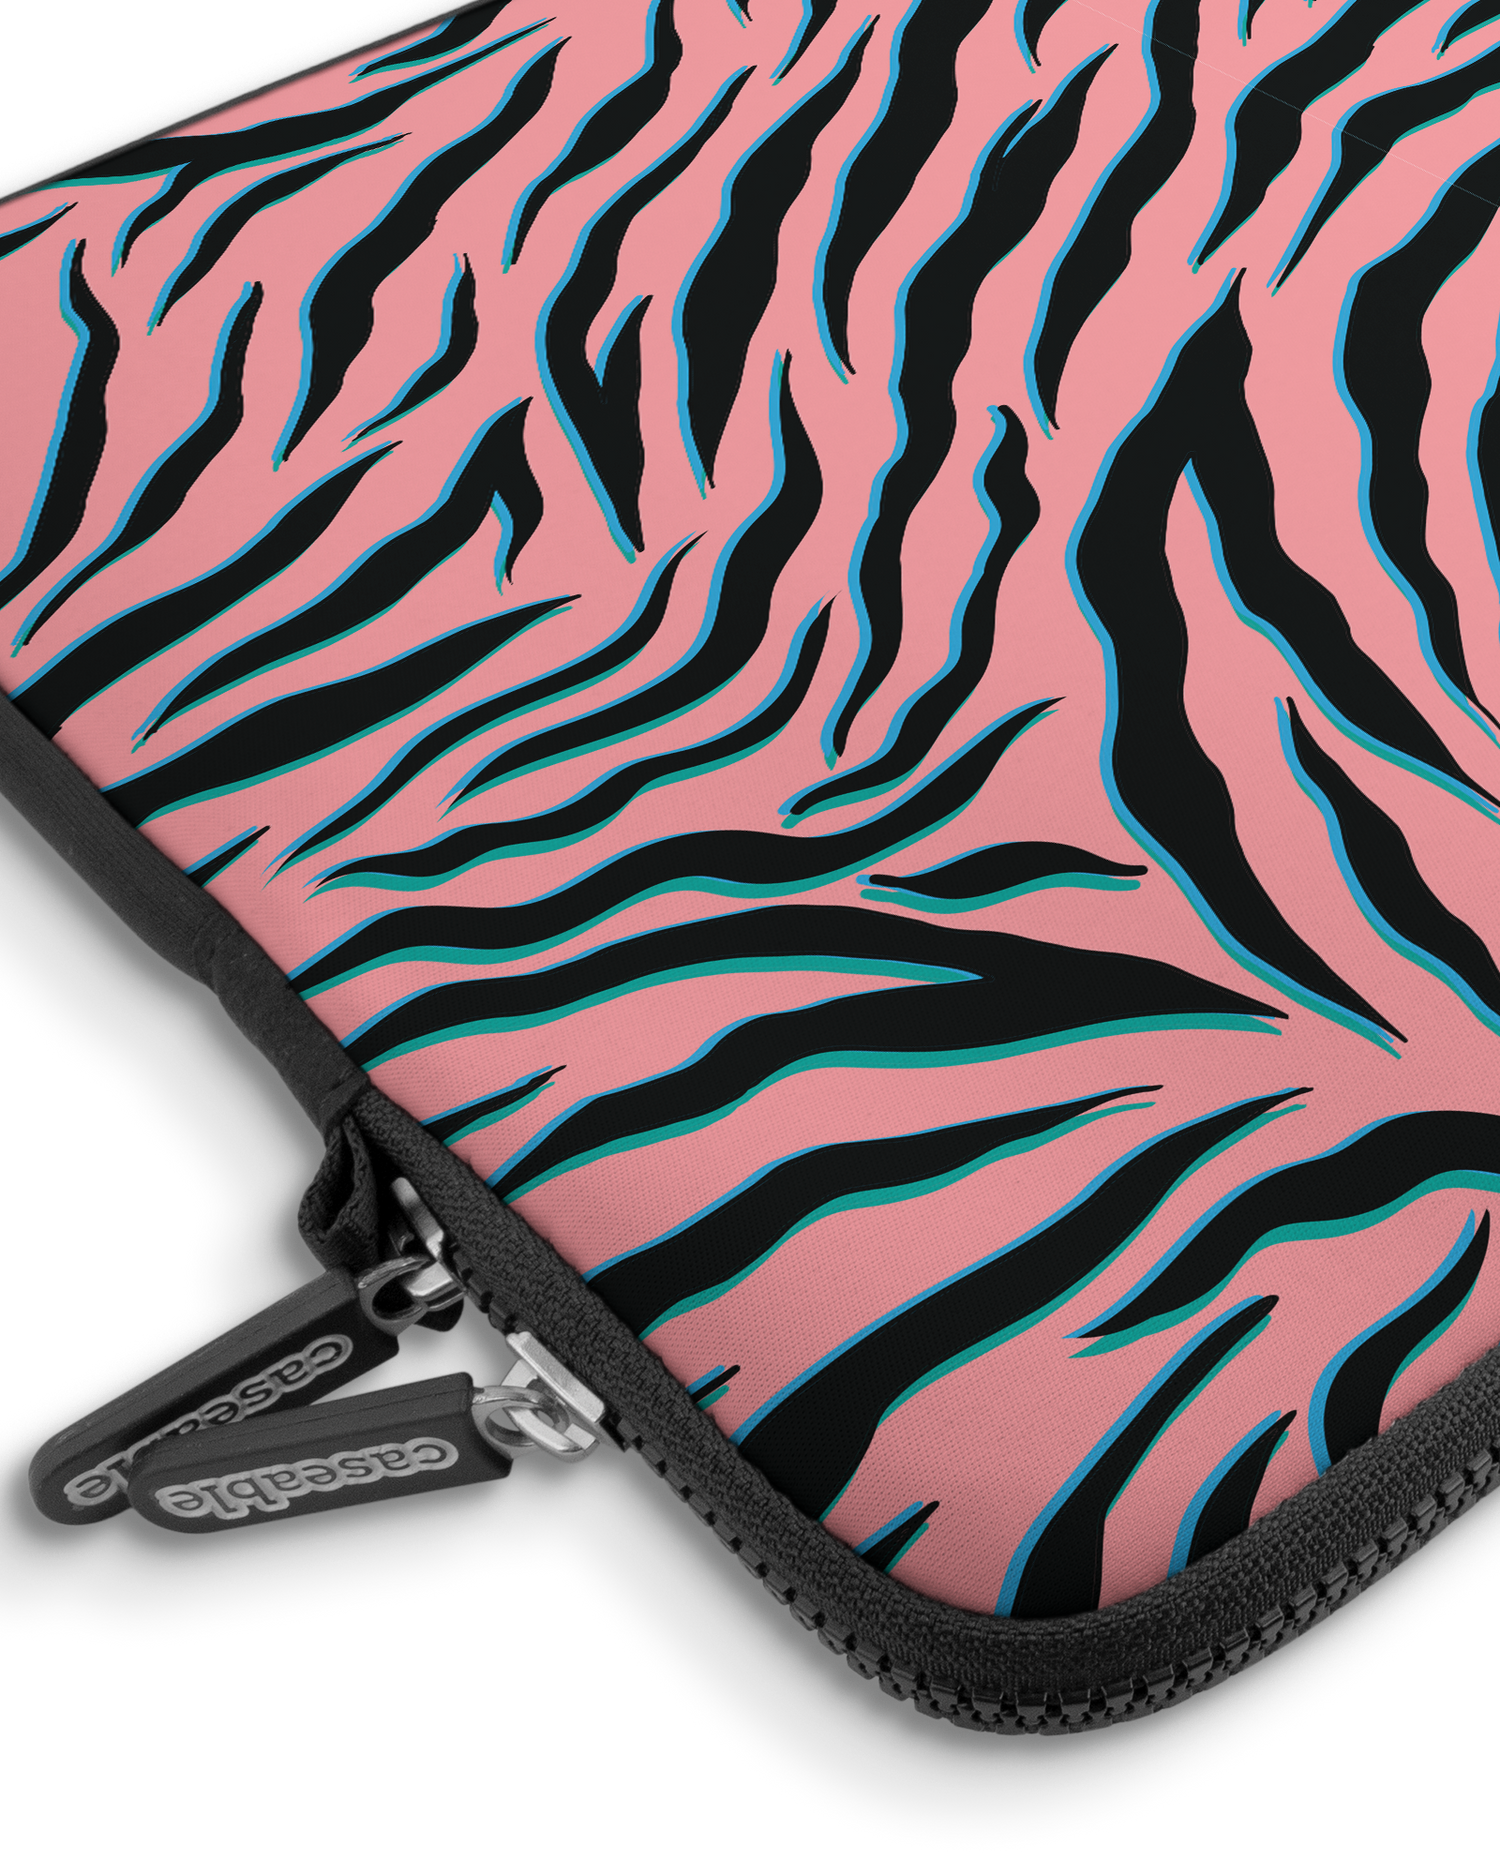 Pink Zebra Premium Laptop Bag 15 inch with device inside